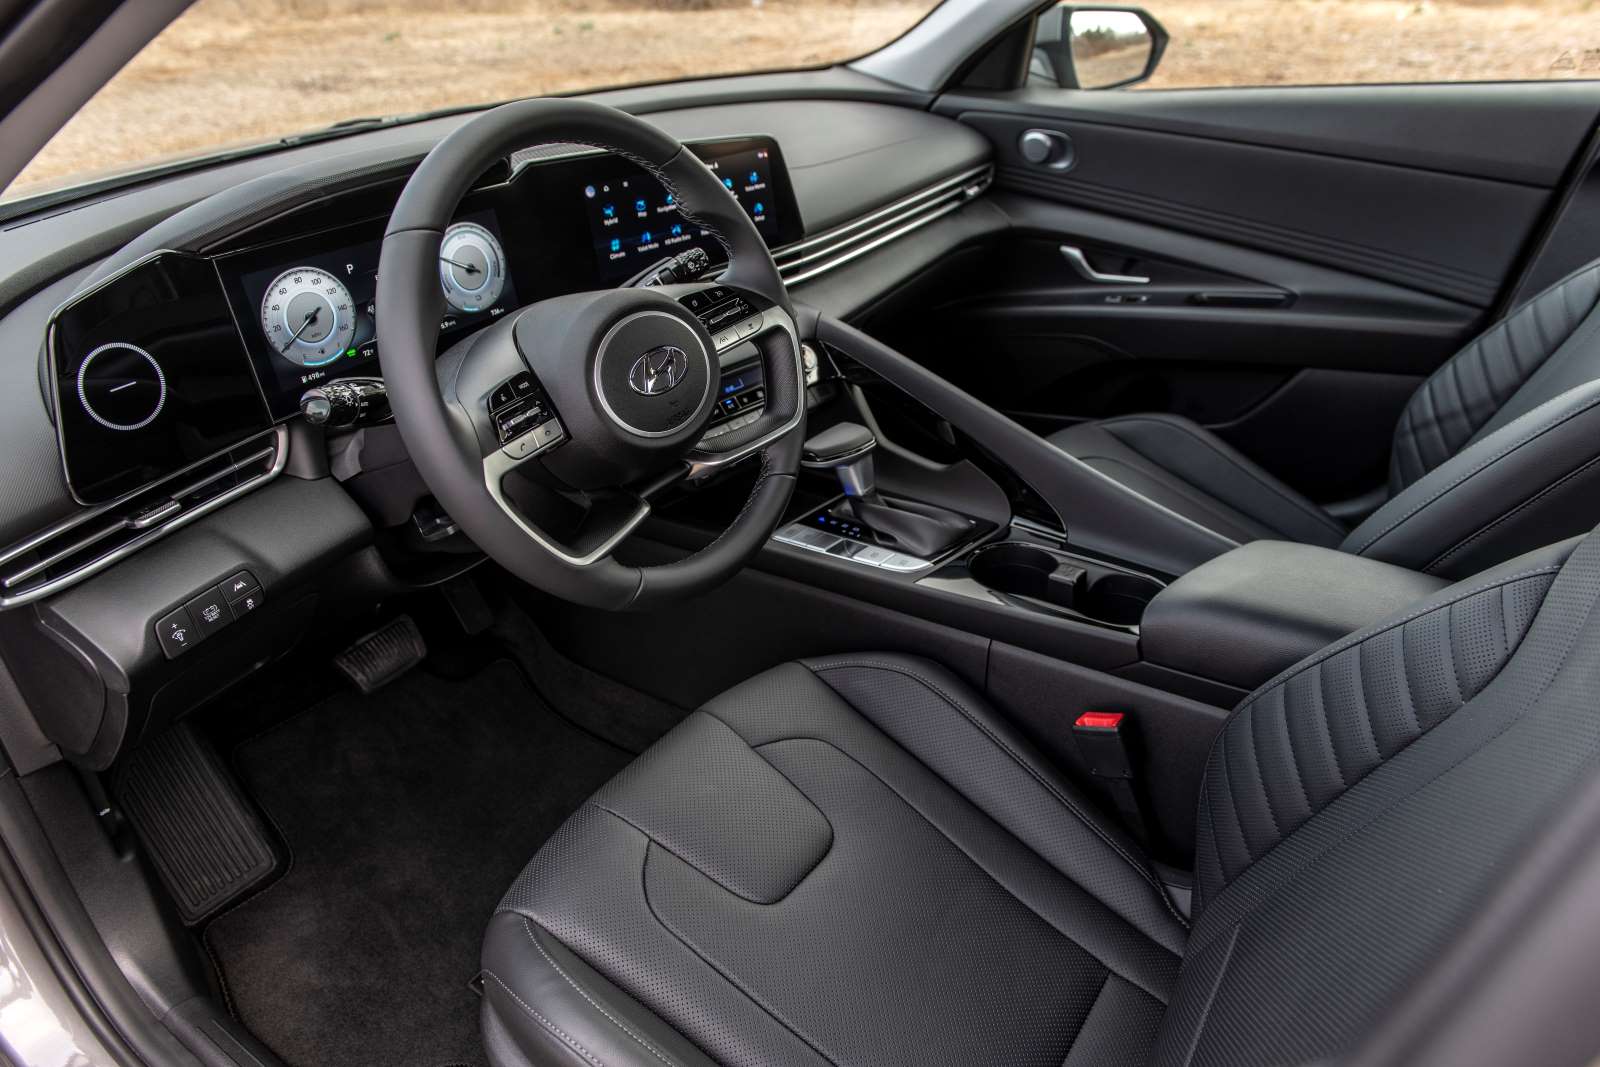 Interior shot of a 2022 Hyundai Elantra Hybrid sedan with a black interior